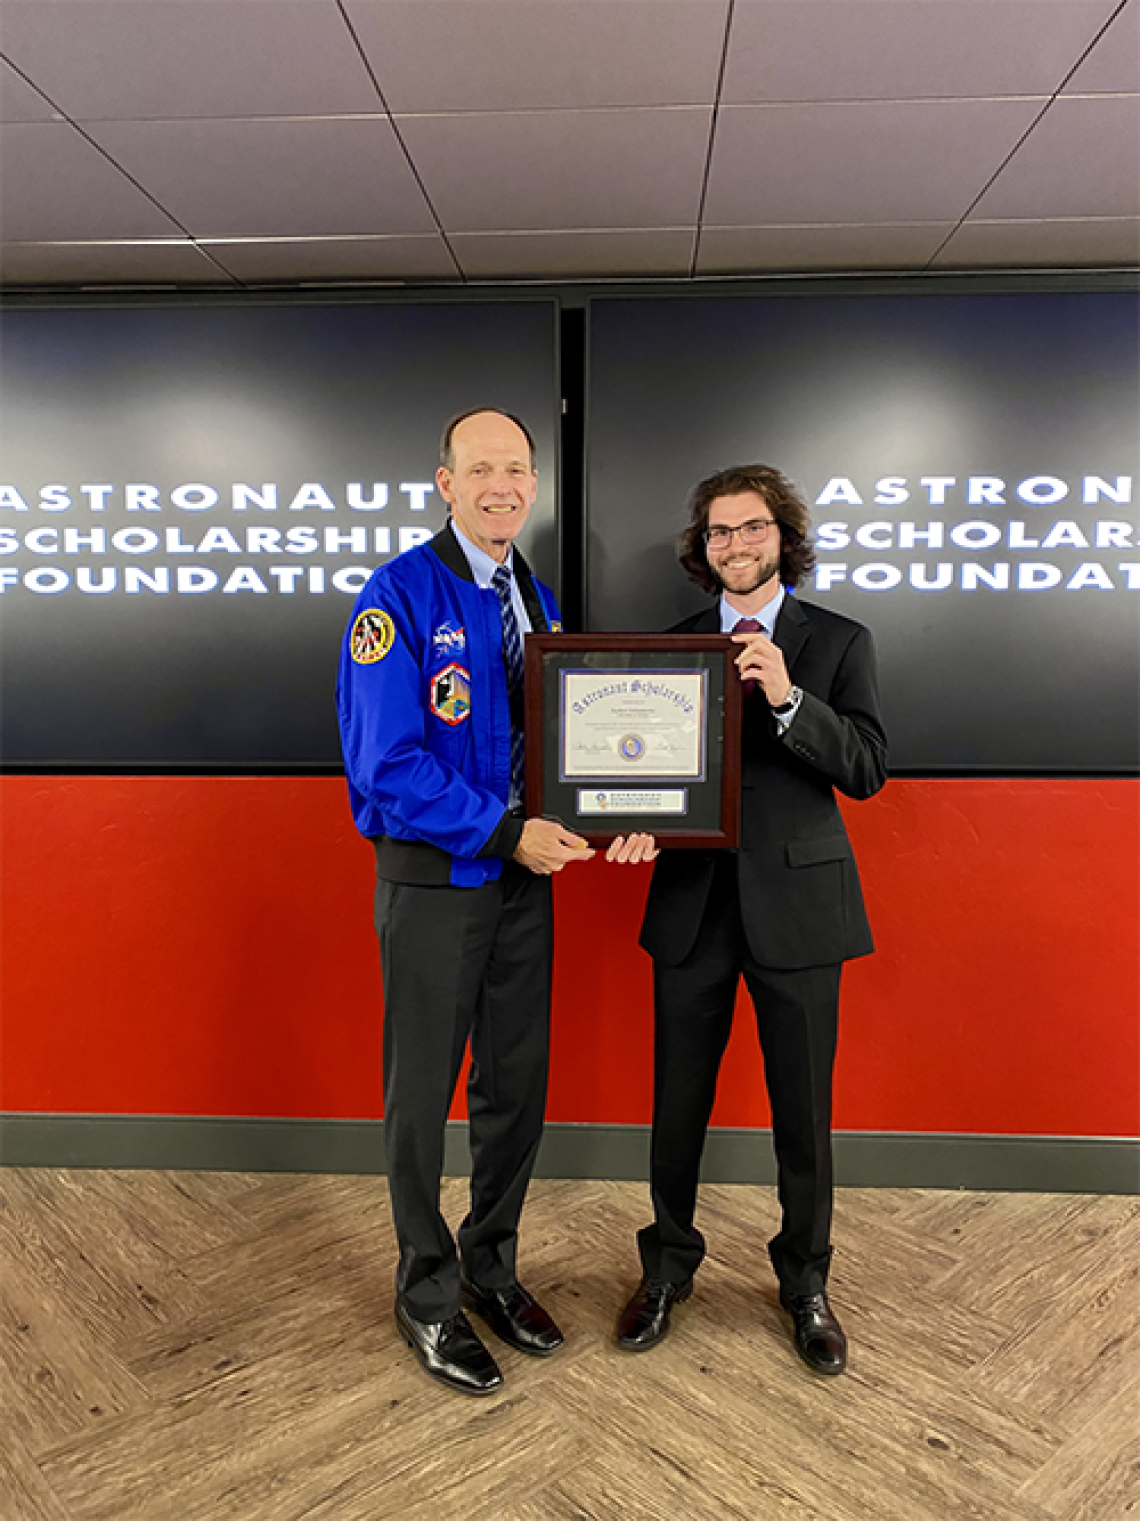 Zach Schlamowitz receiving the Astronaut award